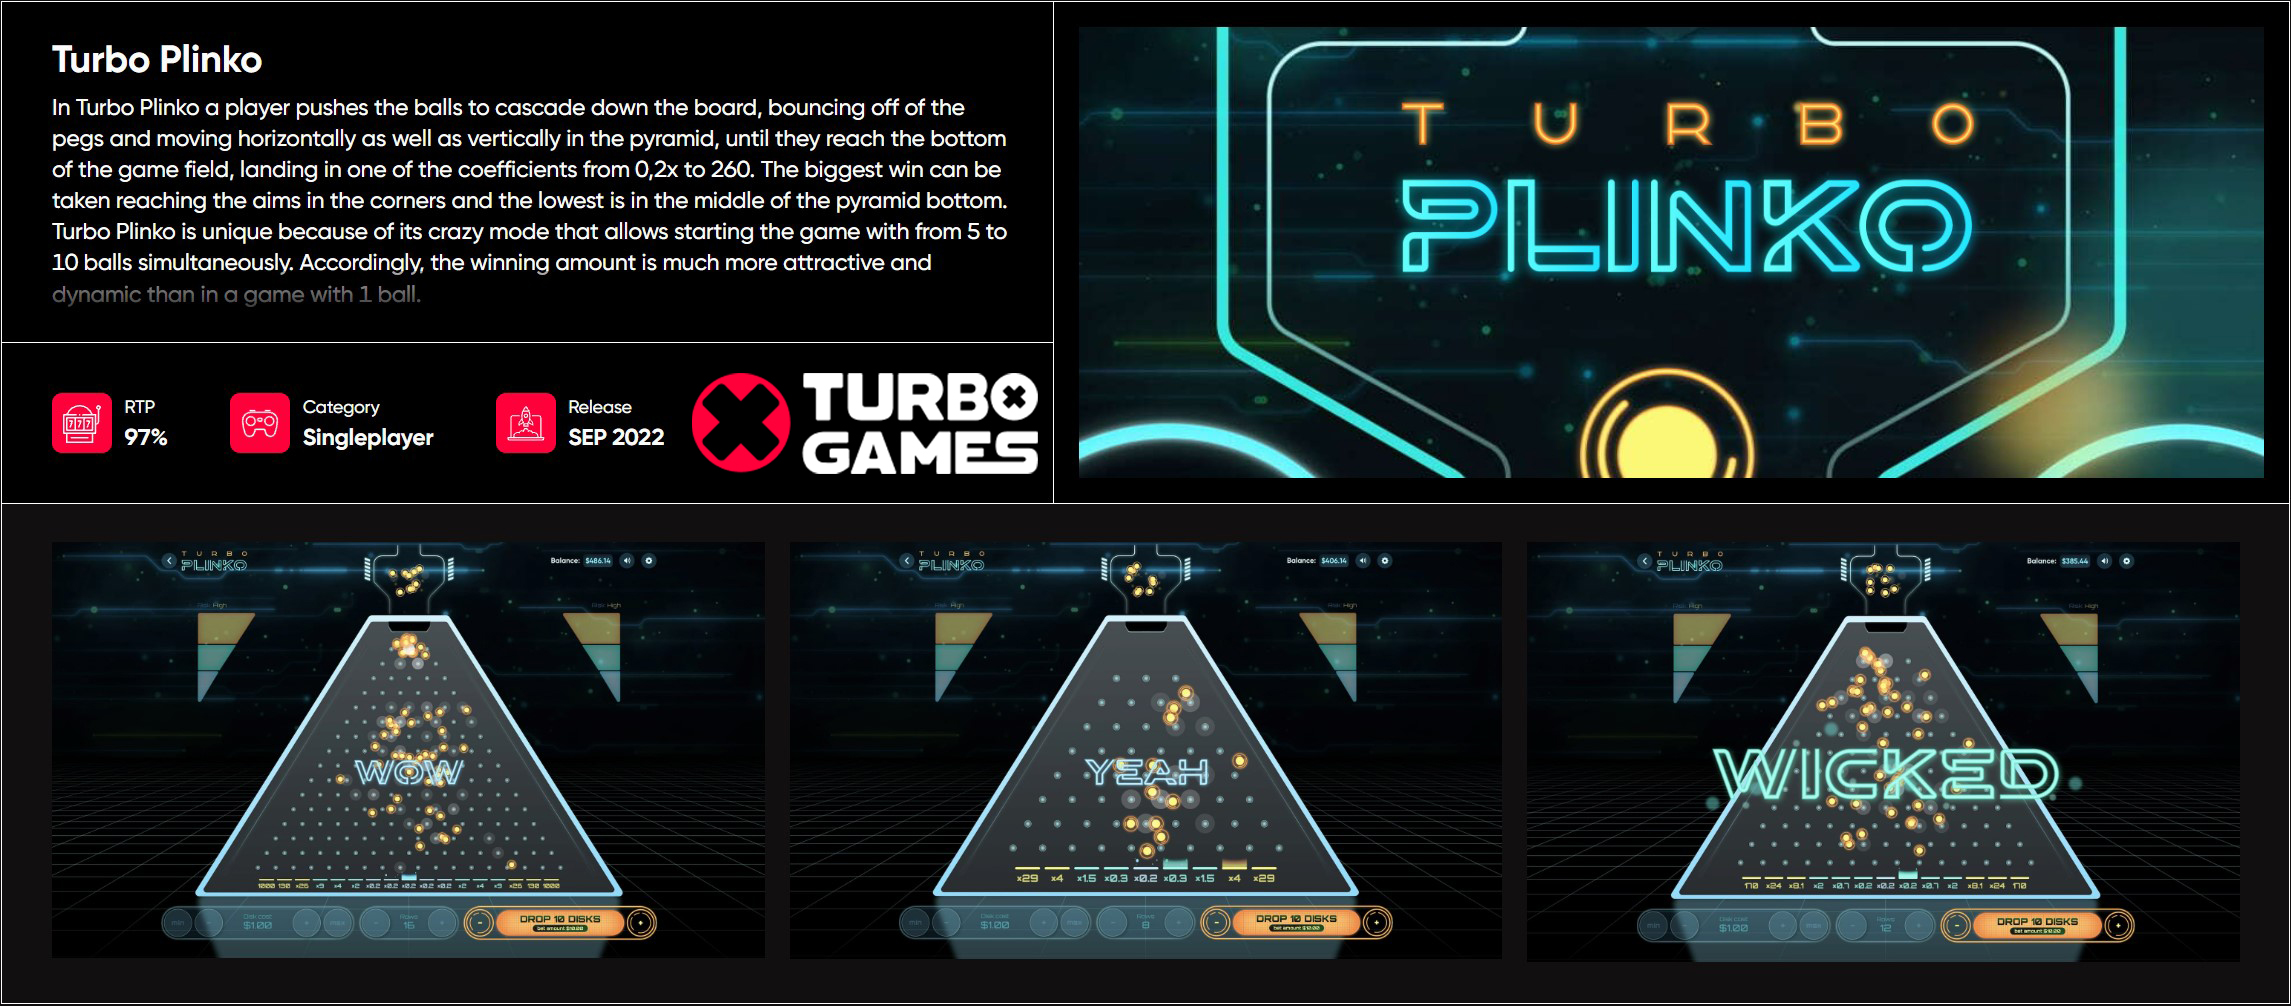 Turbo Plinko by Turbo Games